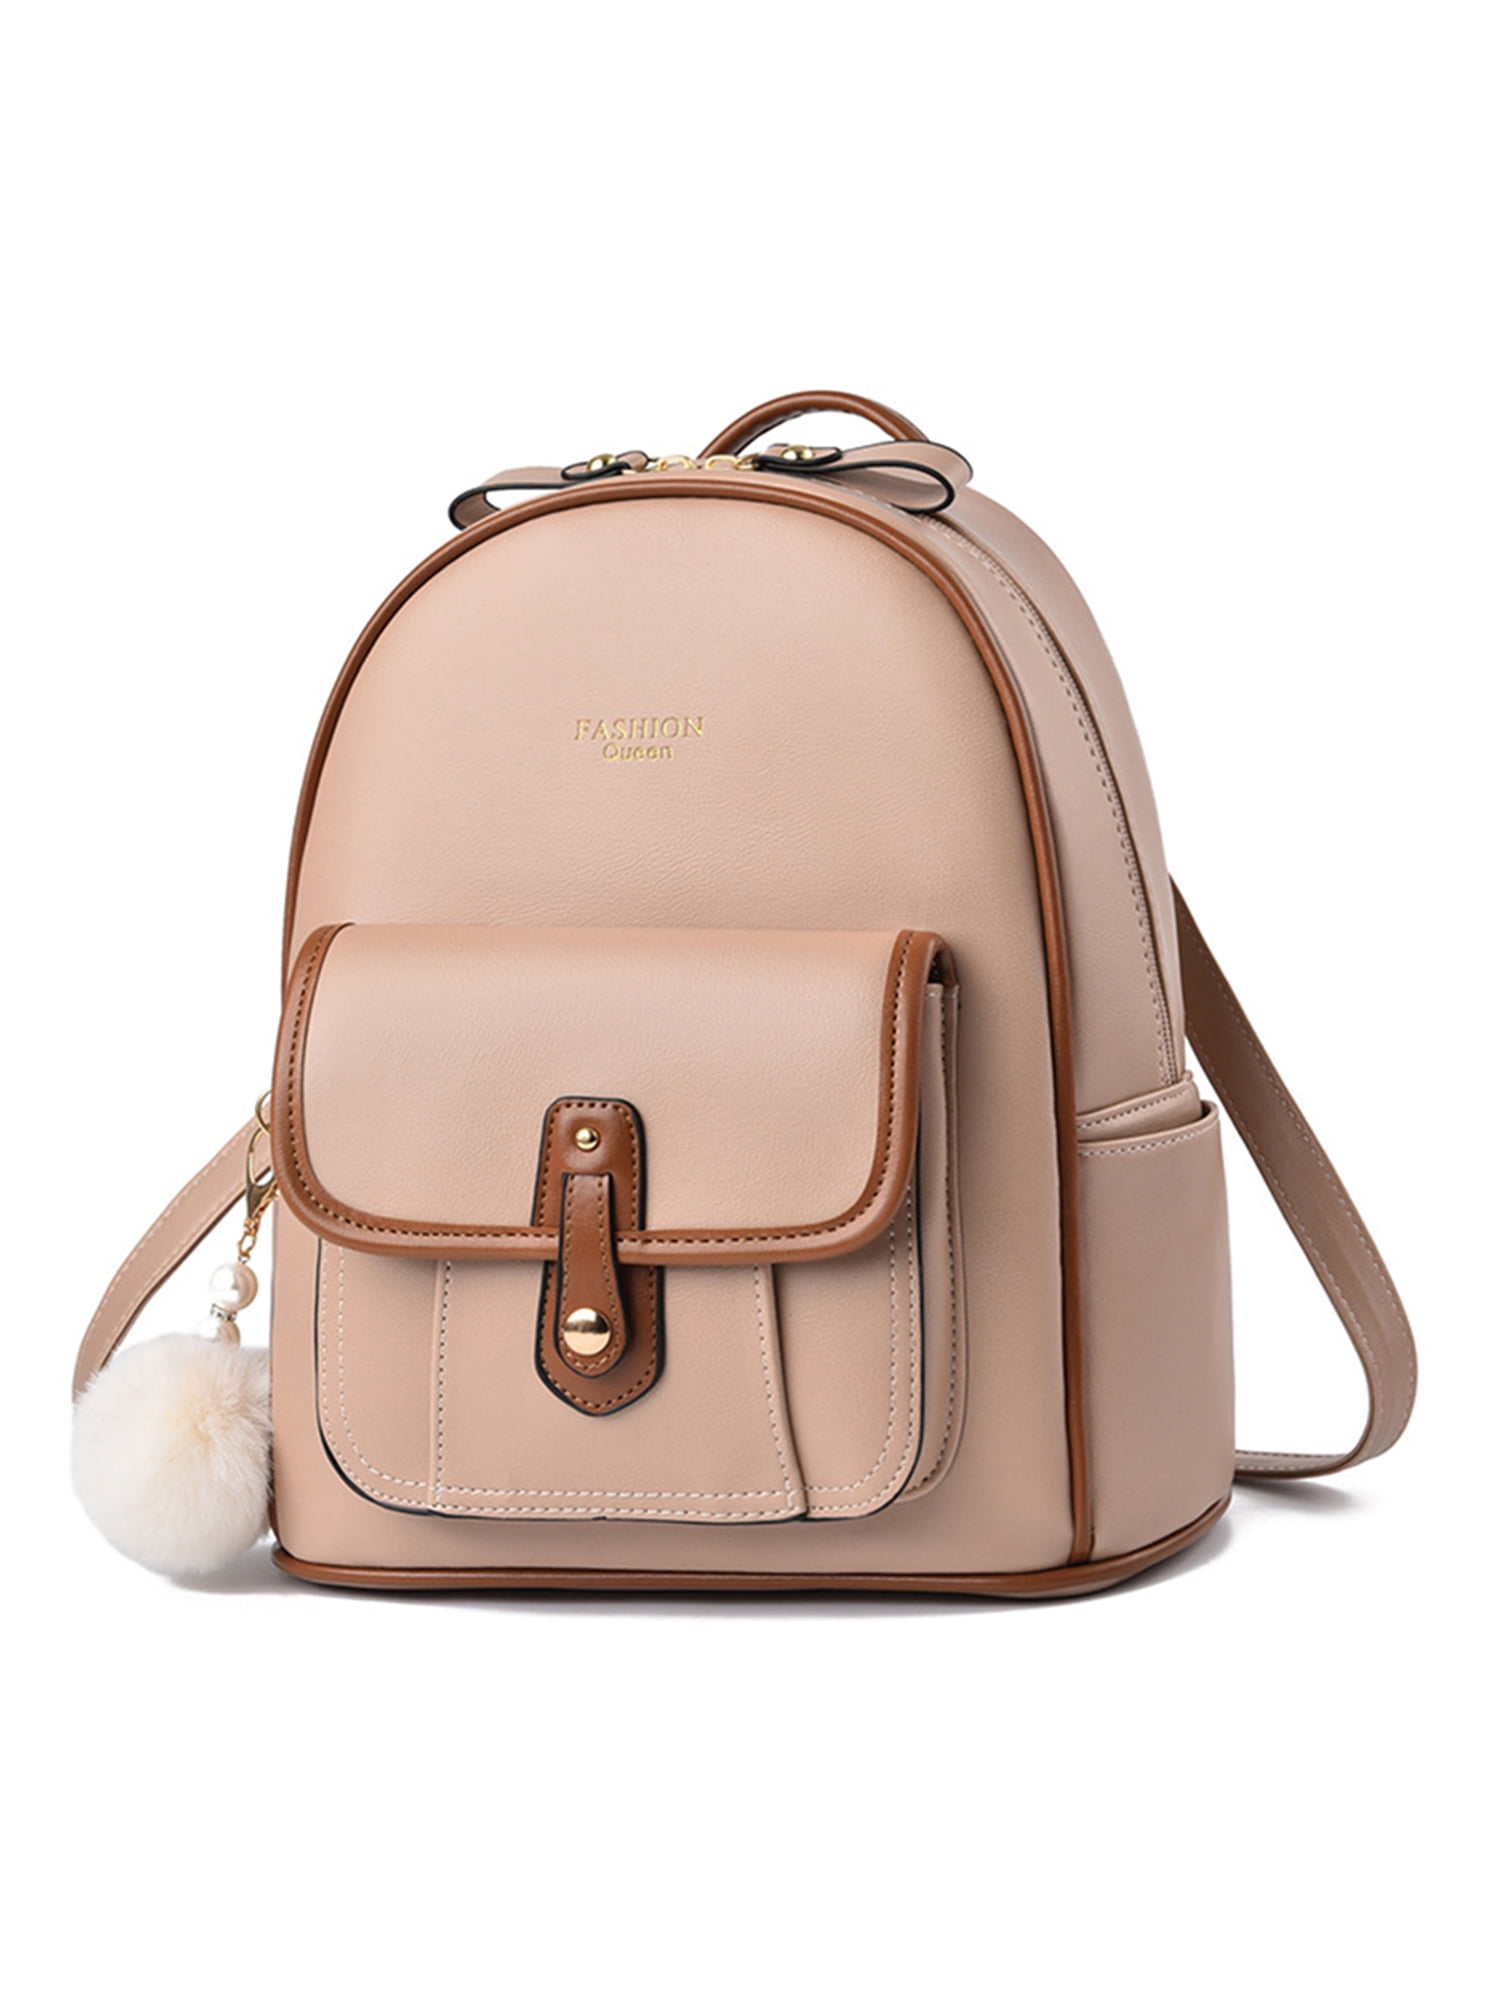 Fashion Mini Backpack Women Leather Double Straps Bag Handbag